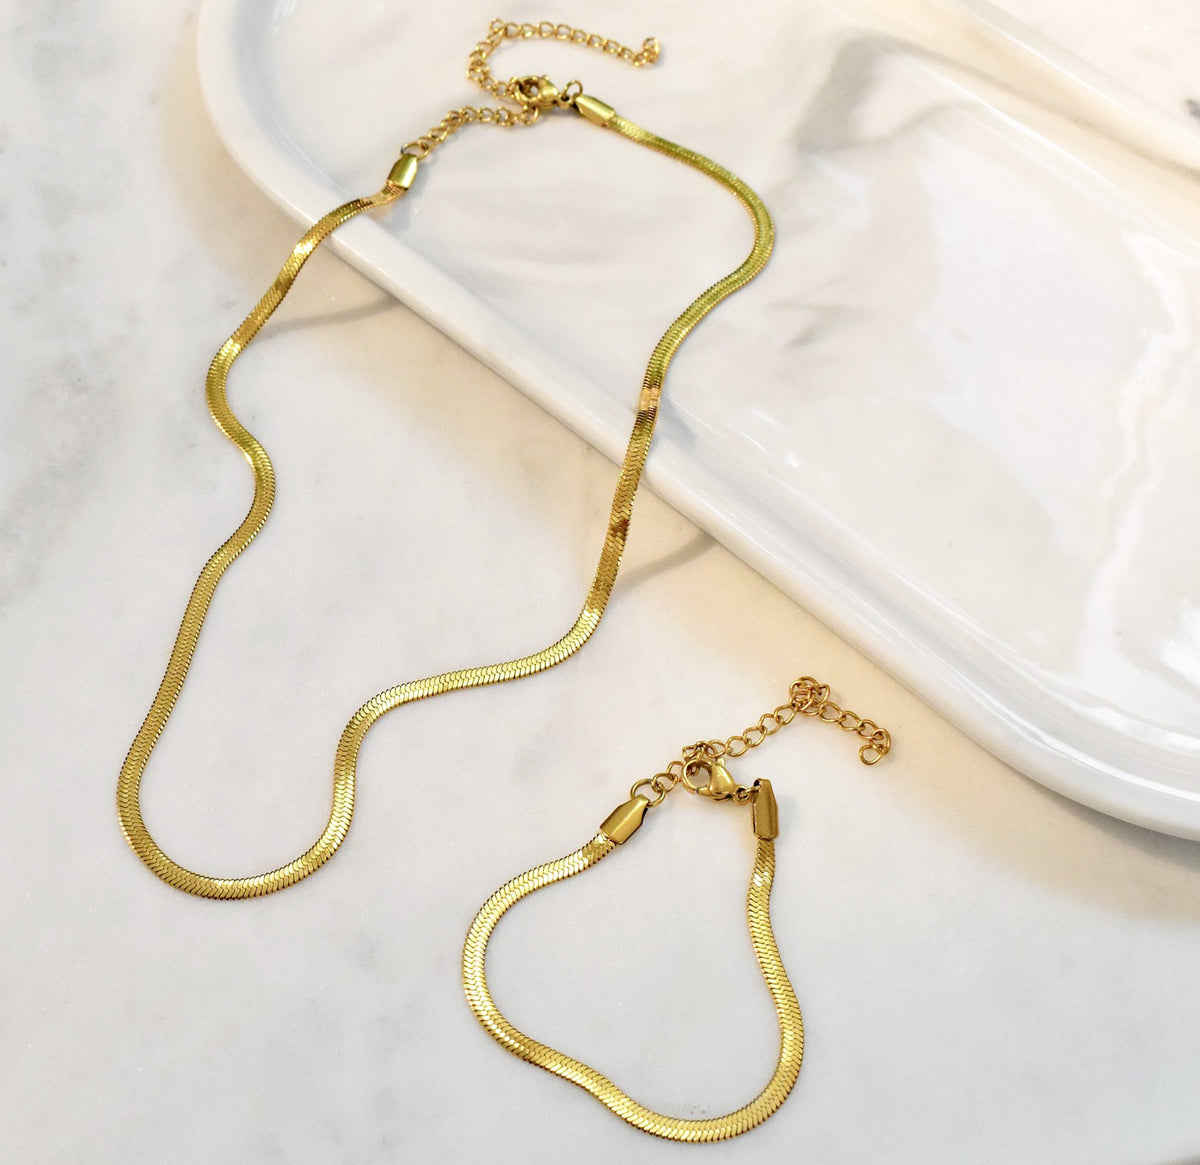 gold snake chain necklace bracelet set waterproof